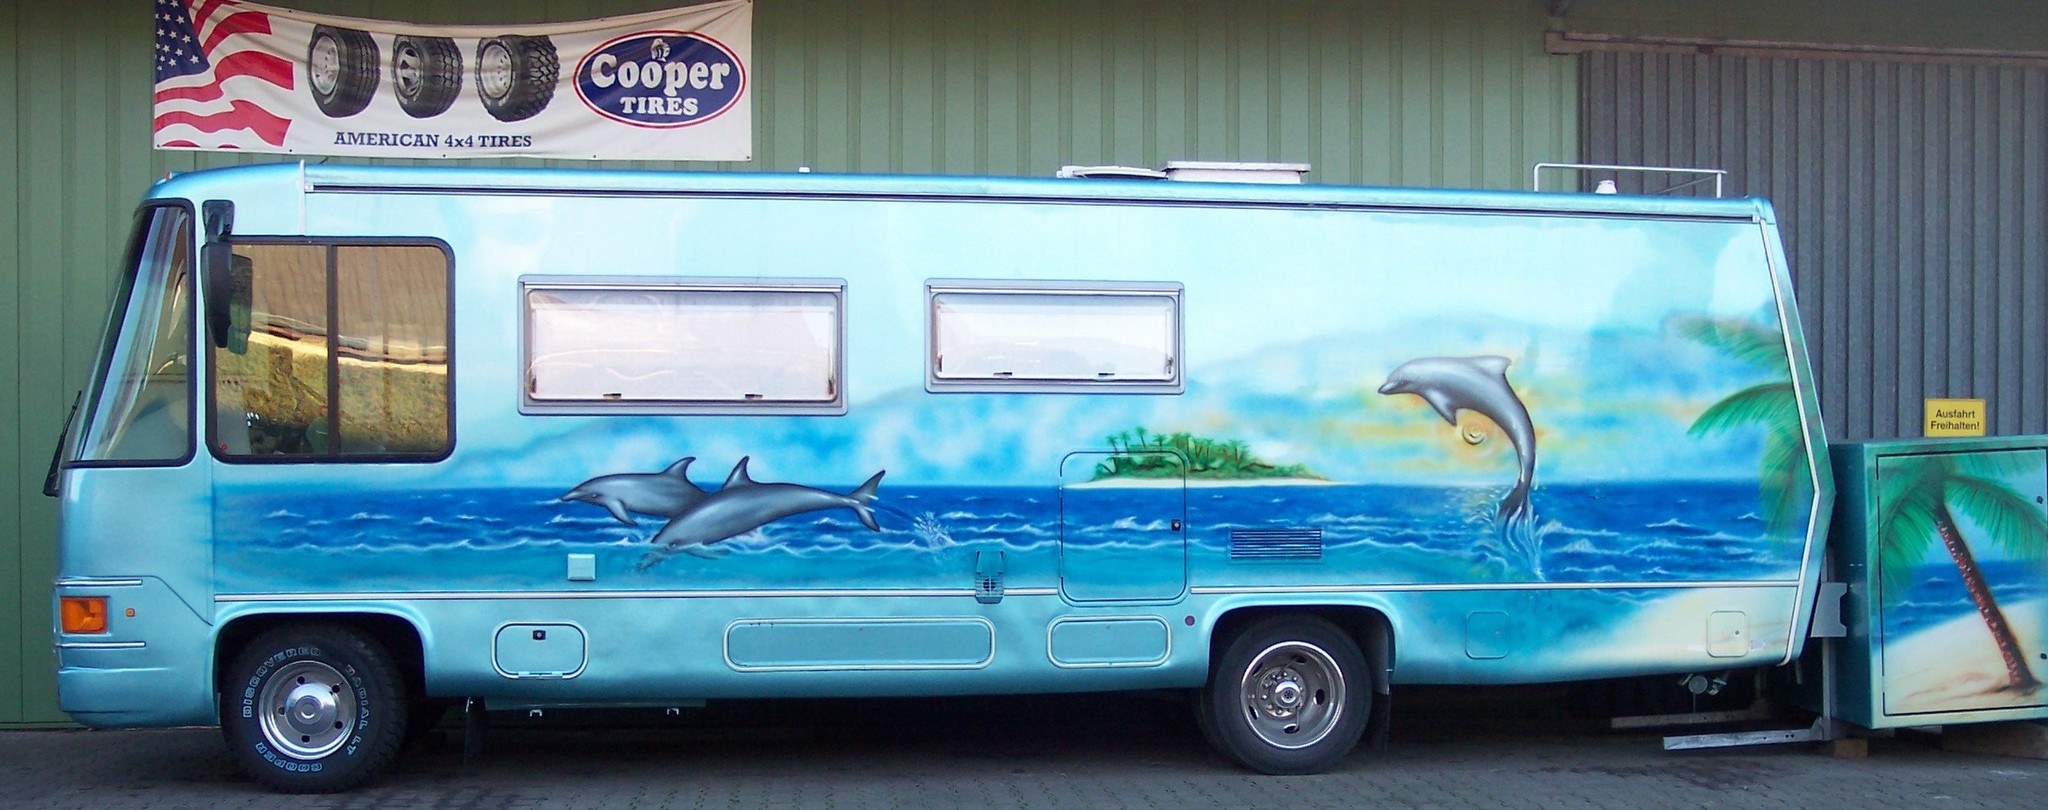 Wohnmobil: "Dolphin"